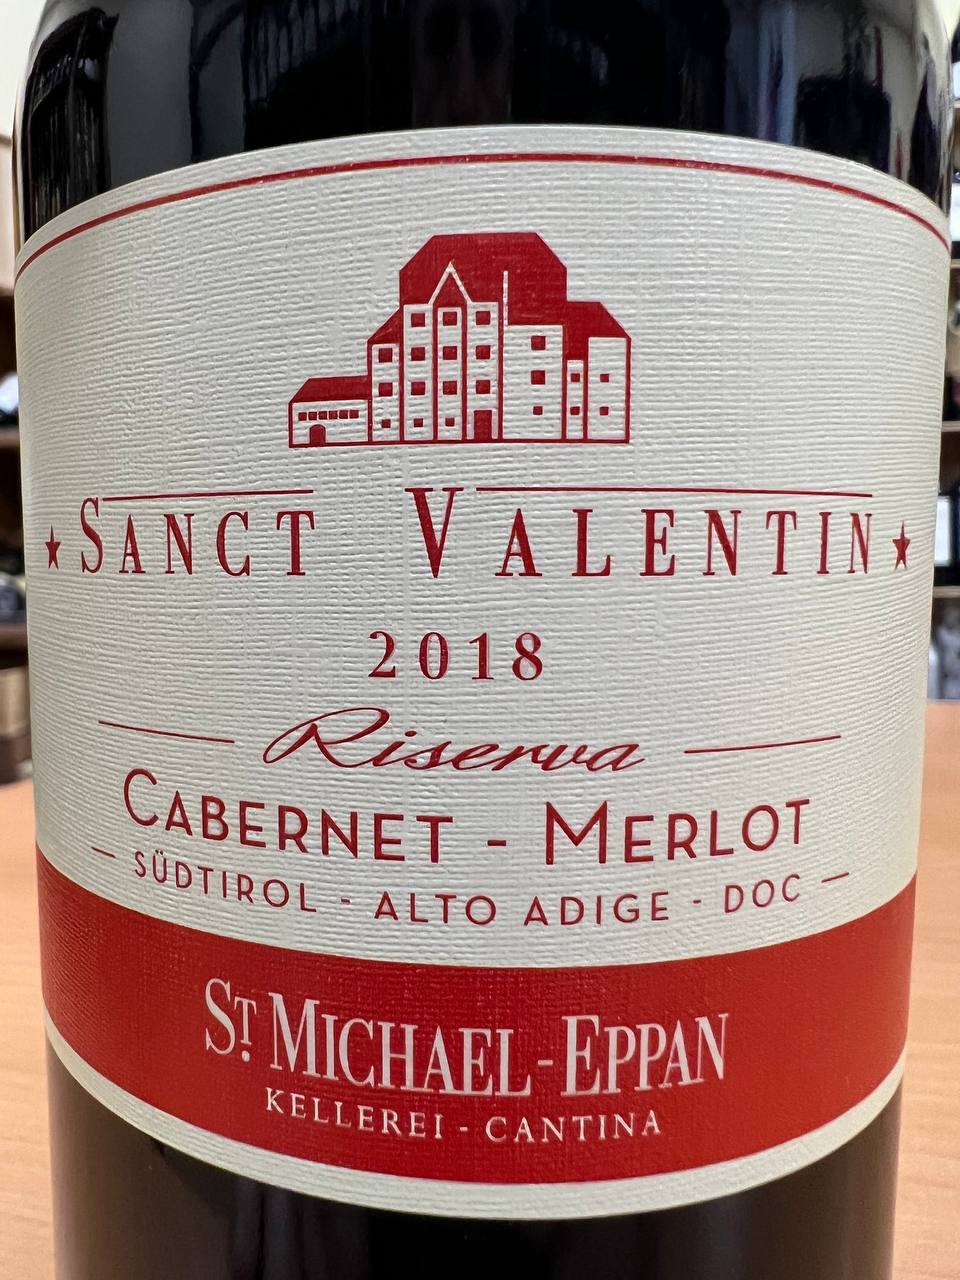 Cabernet-Merlot Riserva Sanct Valentin 2018 St. Michael Eppan